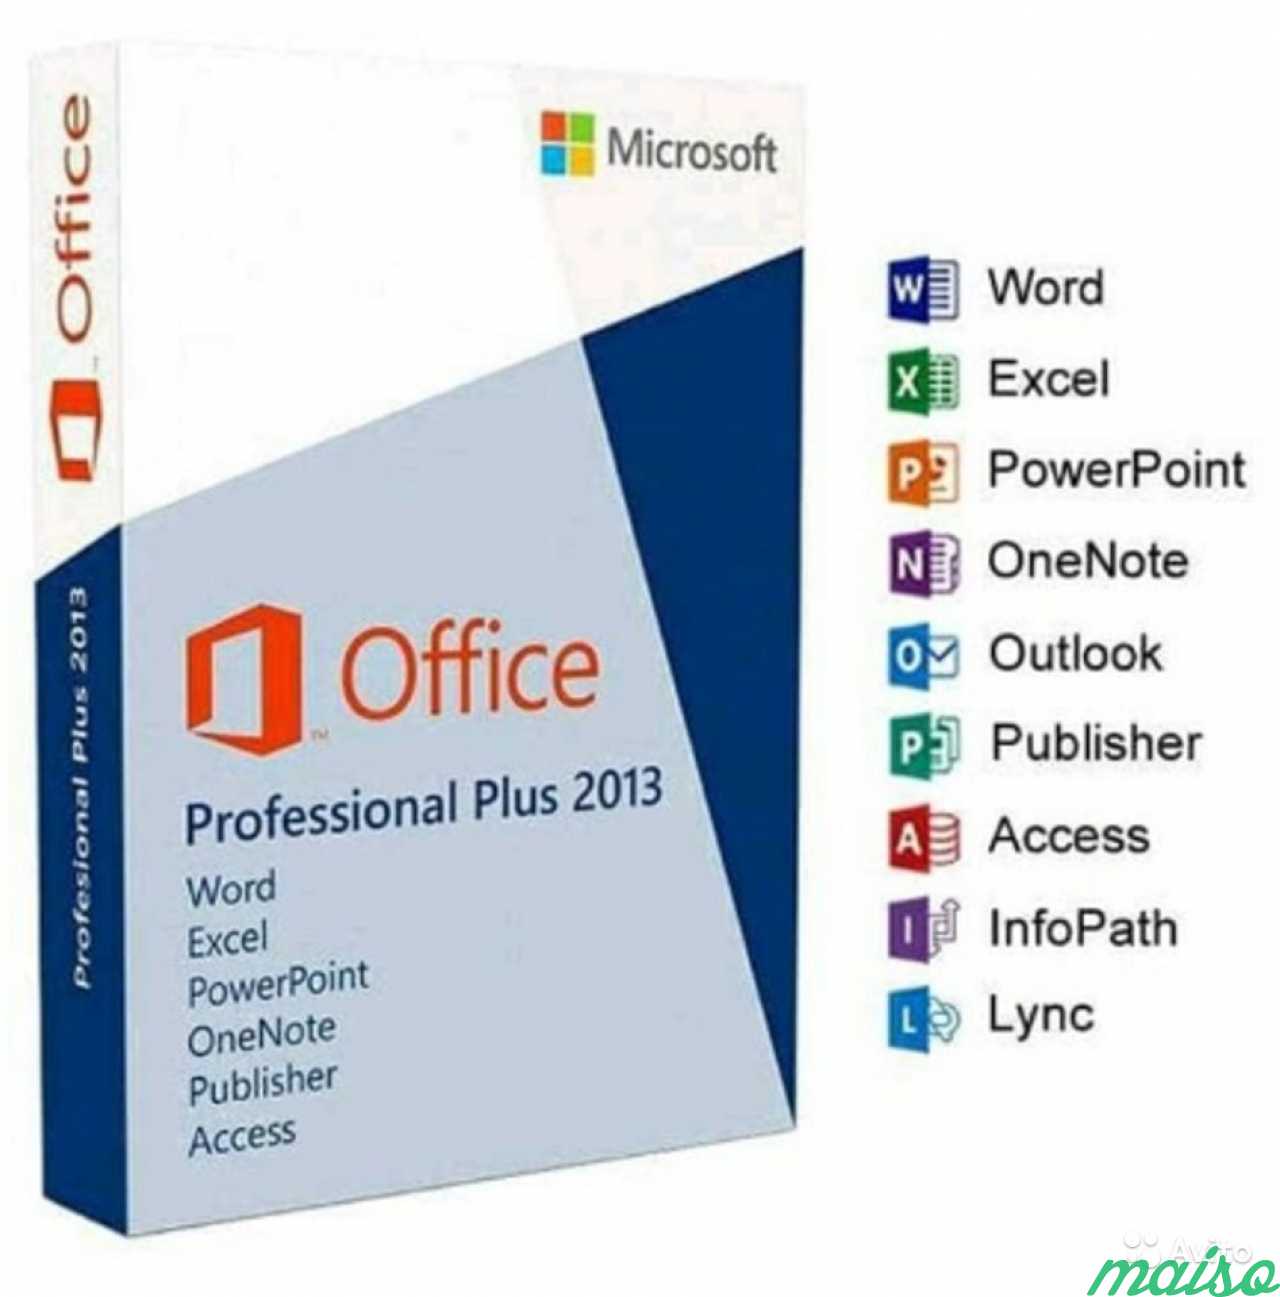 Версии офиса для виндовс. Microsoft Office 2013. Пакет программного обеспечения Microsoft Office. Microsoft Office 2013 professional Plus. Офисный пакет приложений Microsoft Office.